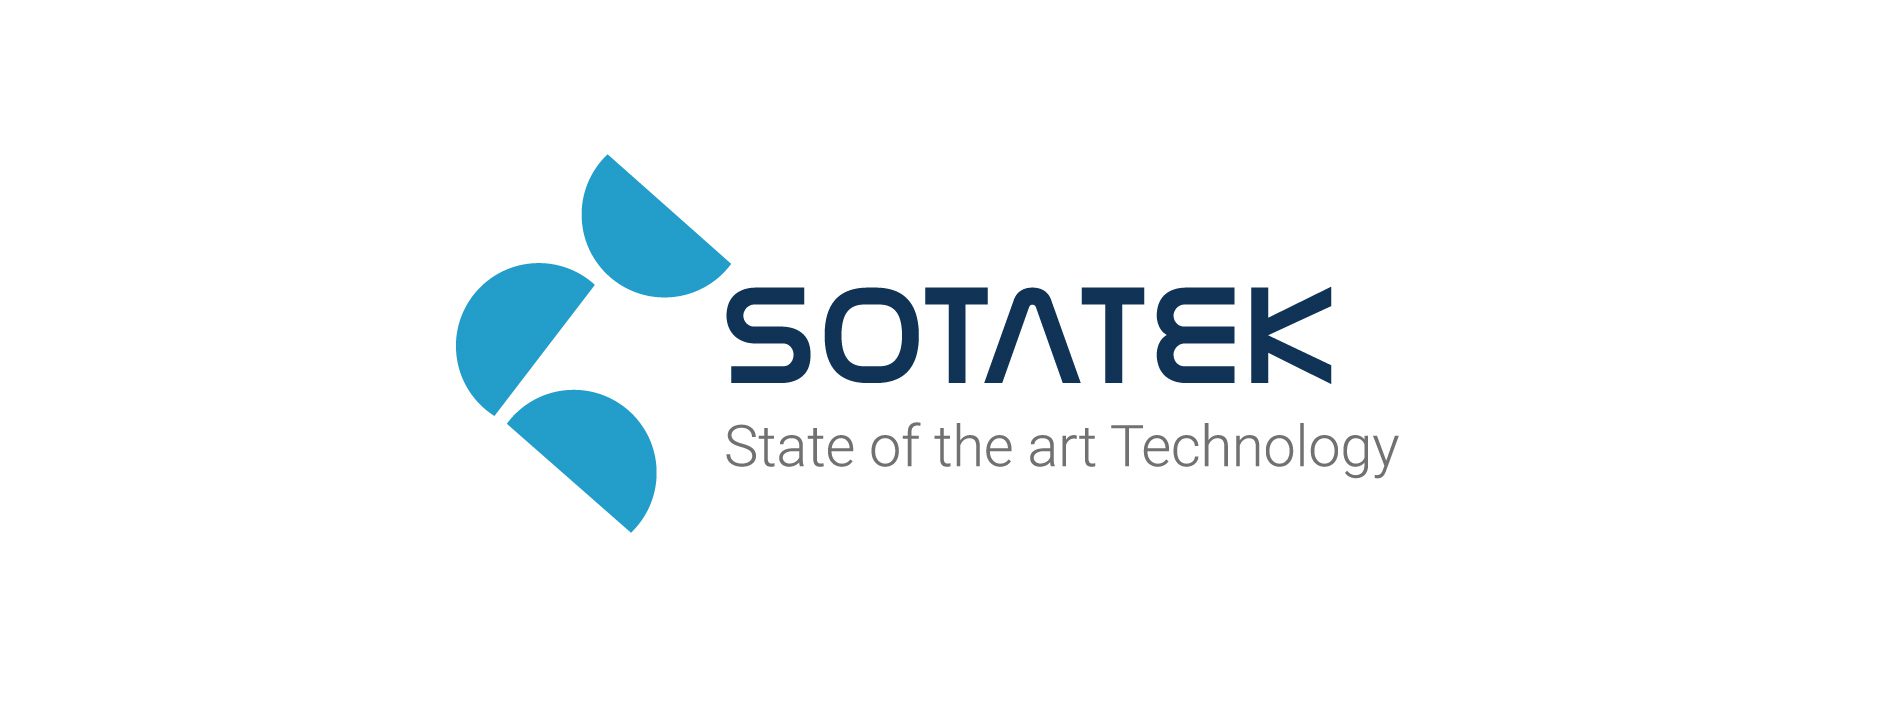 SotaTek is a leading Mobile Application Development Services Provider